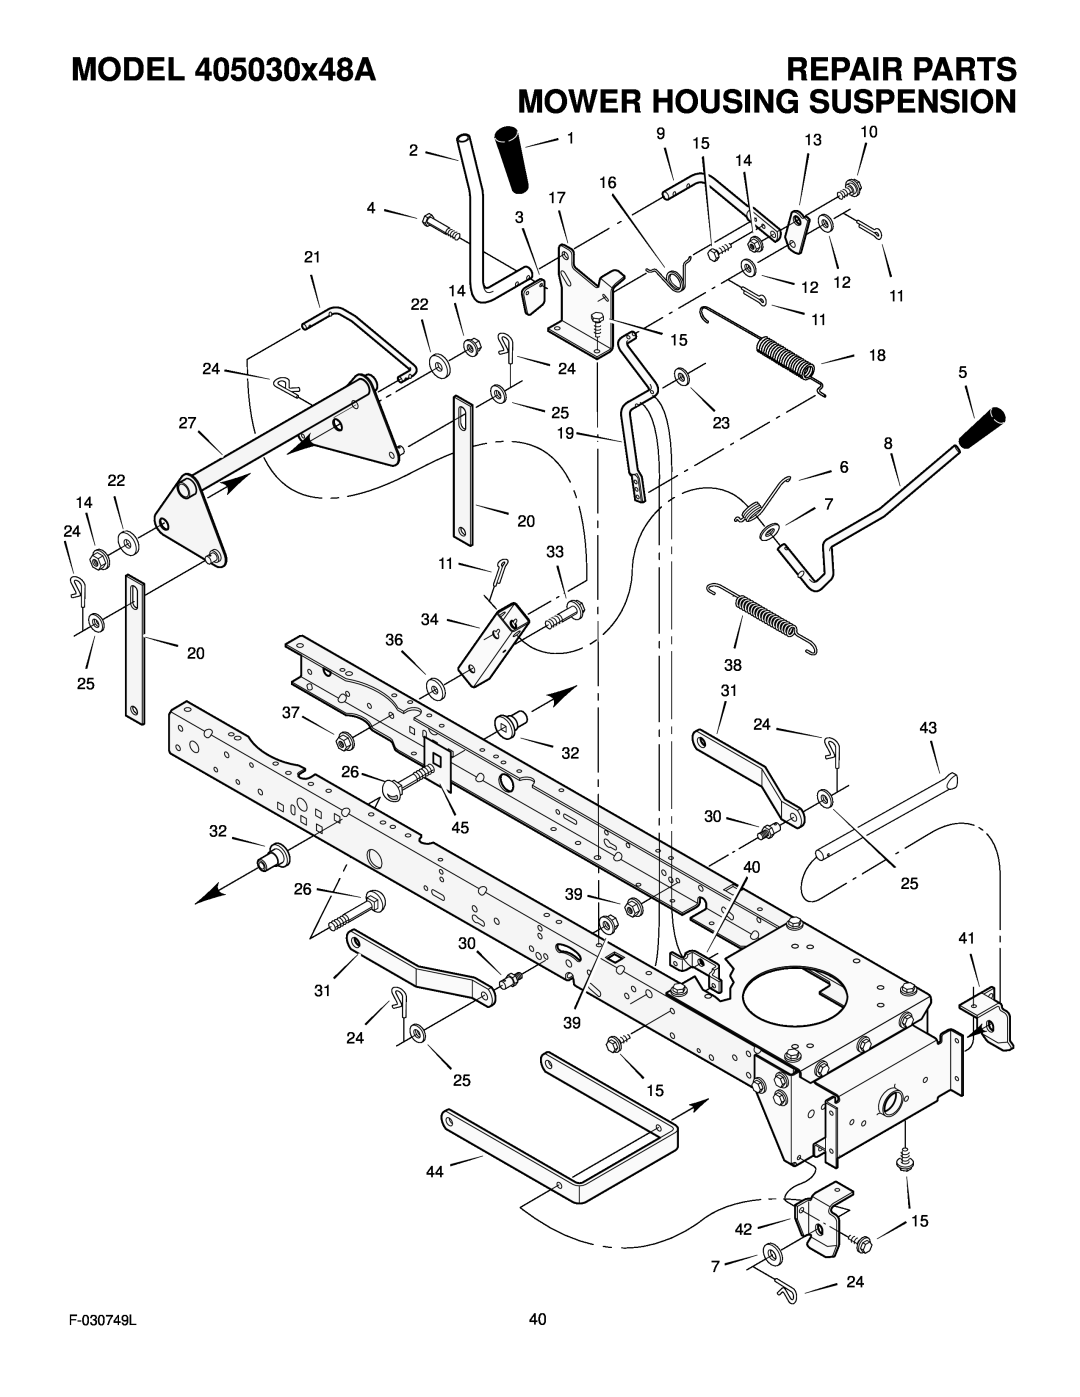 Murray manual Mower Housing Suspension, MODEL 405030x48A, Repair Parts, F-030749L 